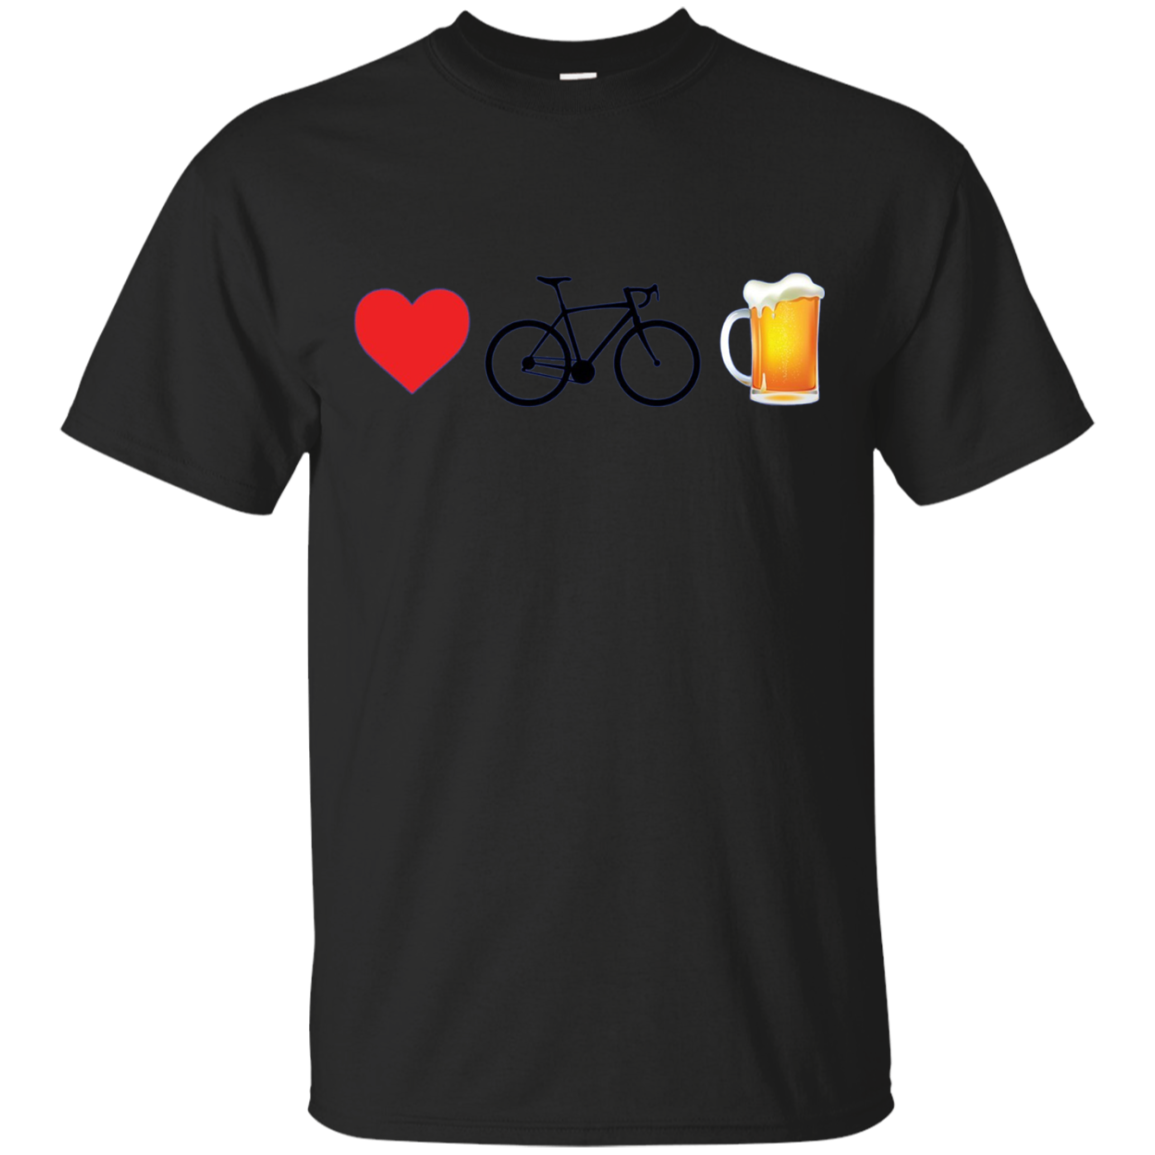 Love Cycling And Beer T-shirt Fun Cycling Love T-shirt